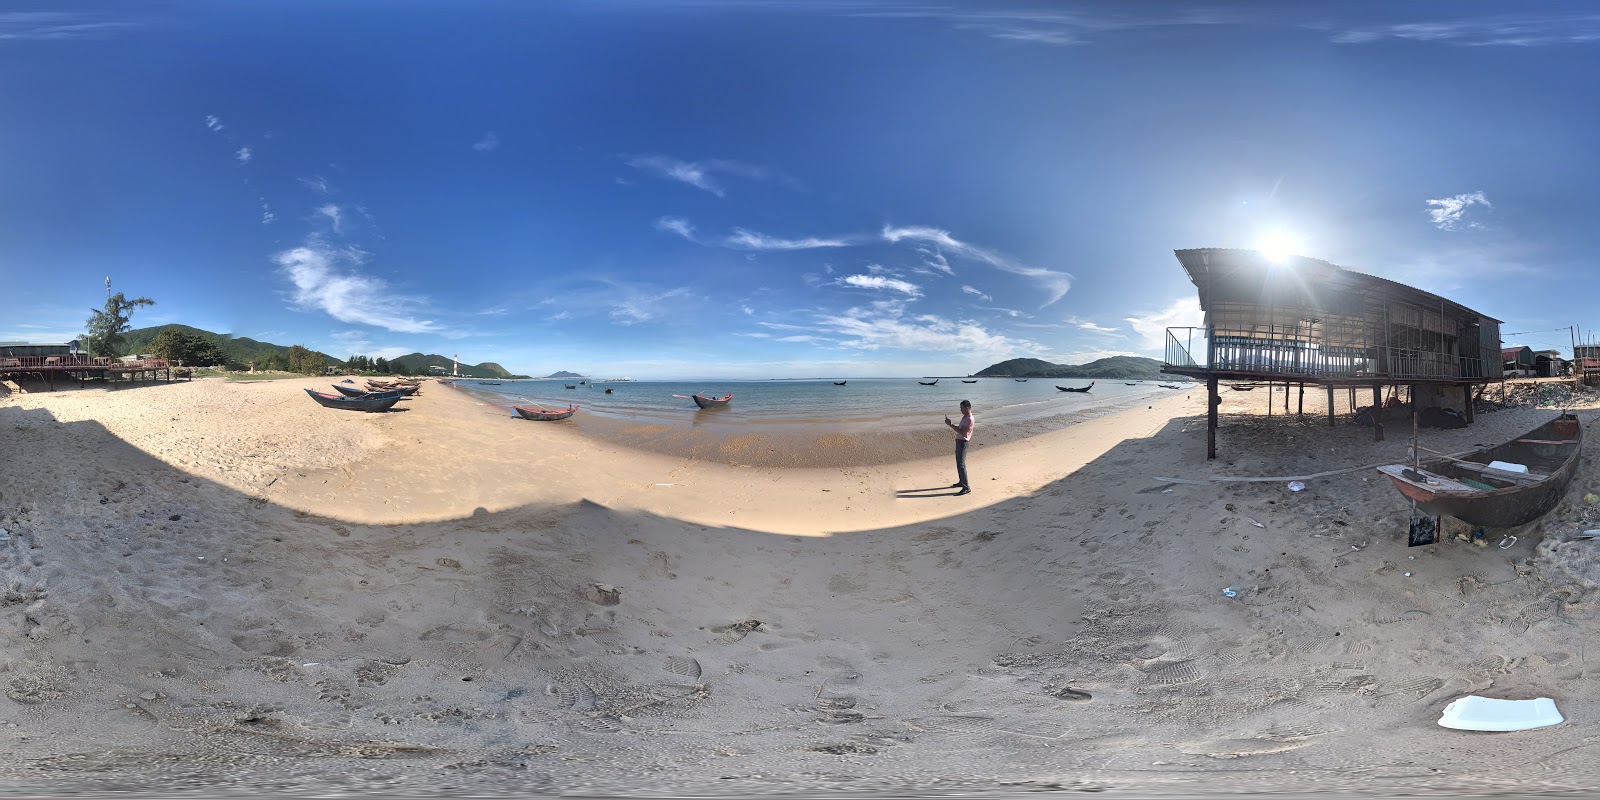 Zdjęcie Hai Phong Beach obszar udogodnień